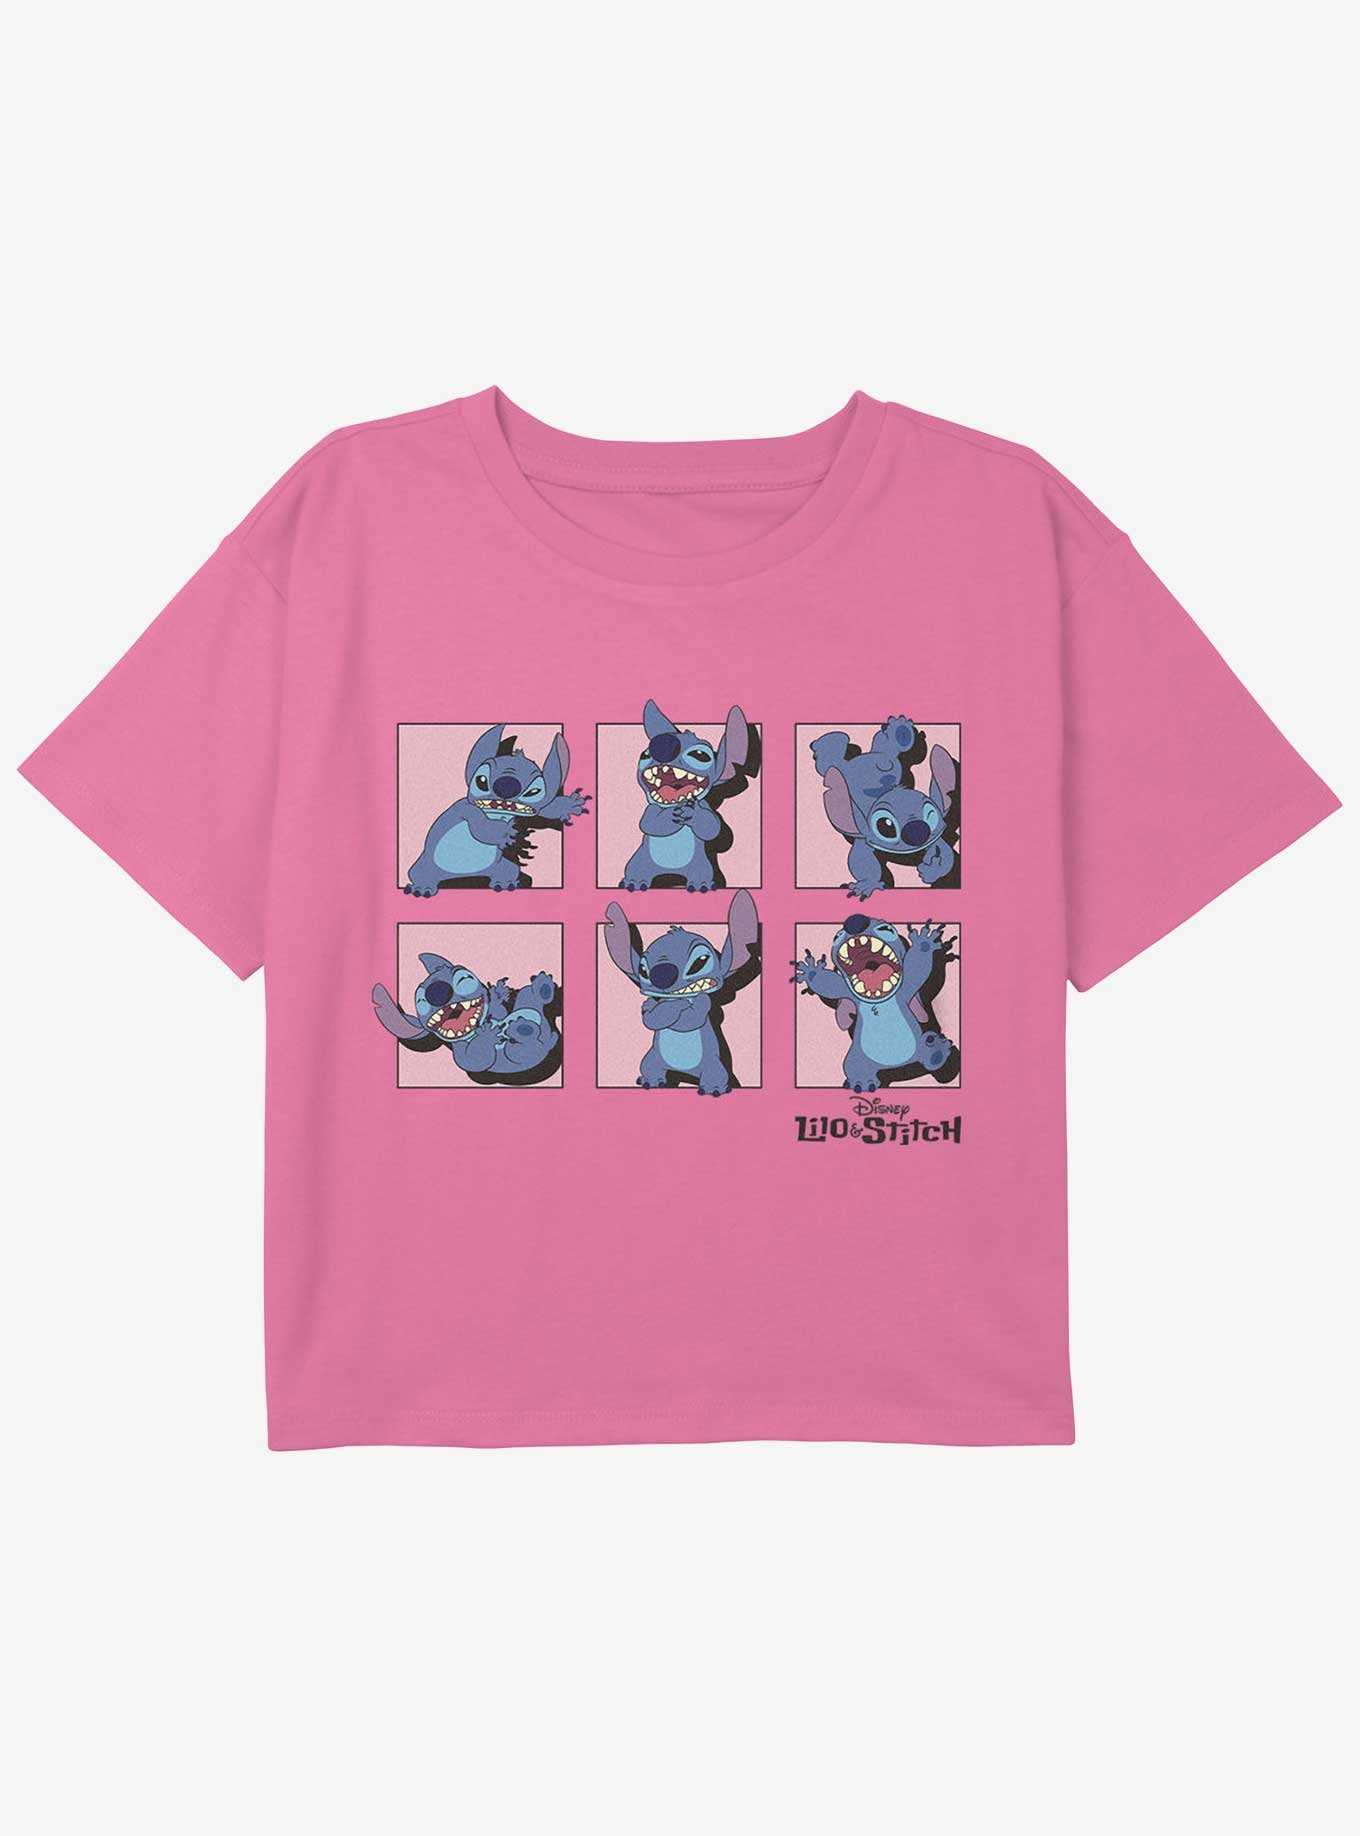 Disney Lilo & Stitch Alien Poses Girls Youth Crop T-Shirt, , hi-res